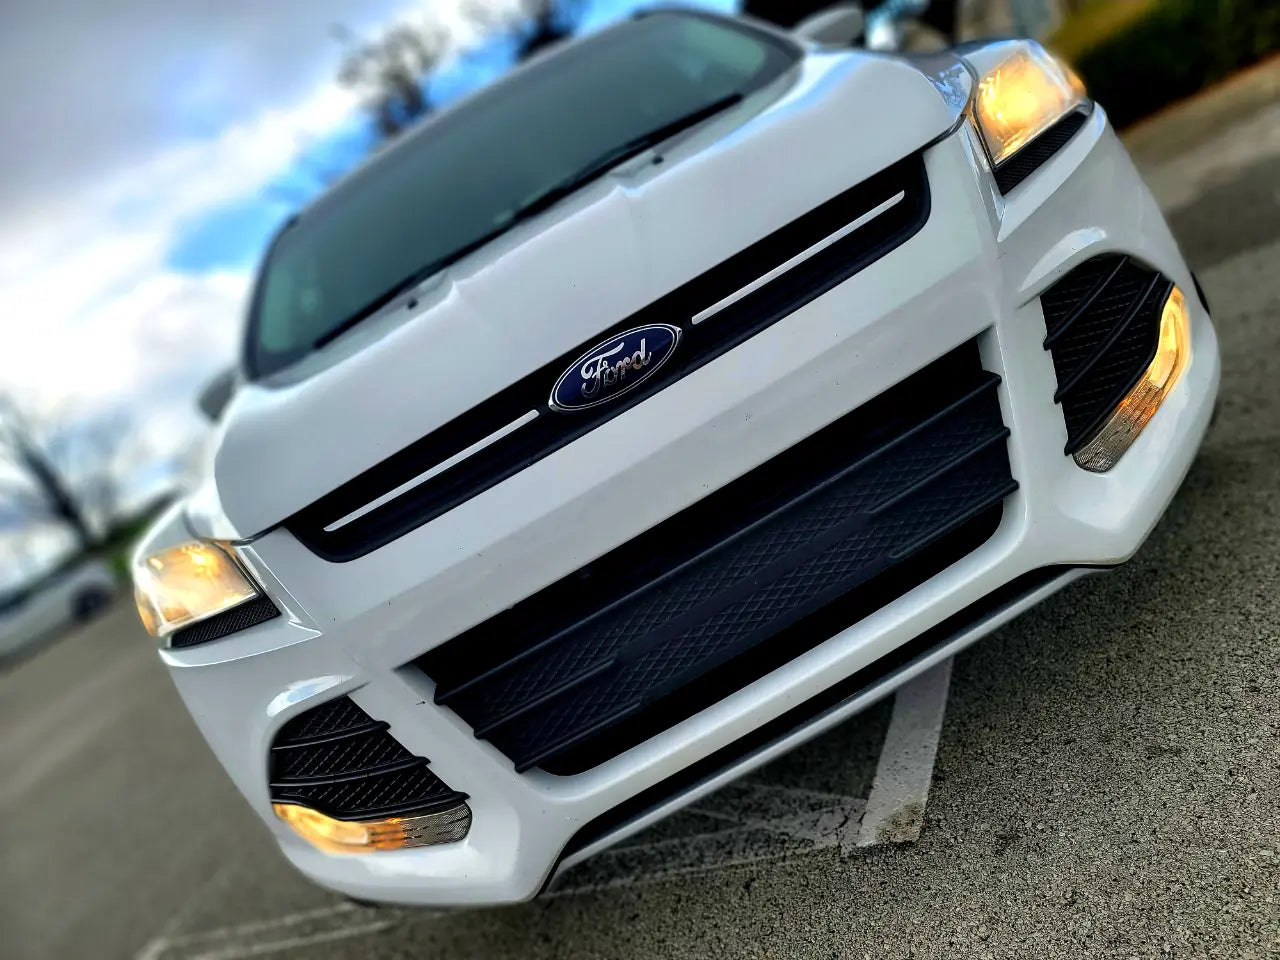 2016 Ford Escape SE $799 DOWN & DRIVE IN 1 HOUR!